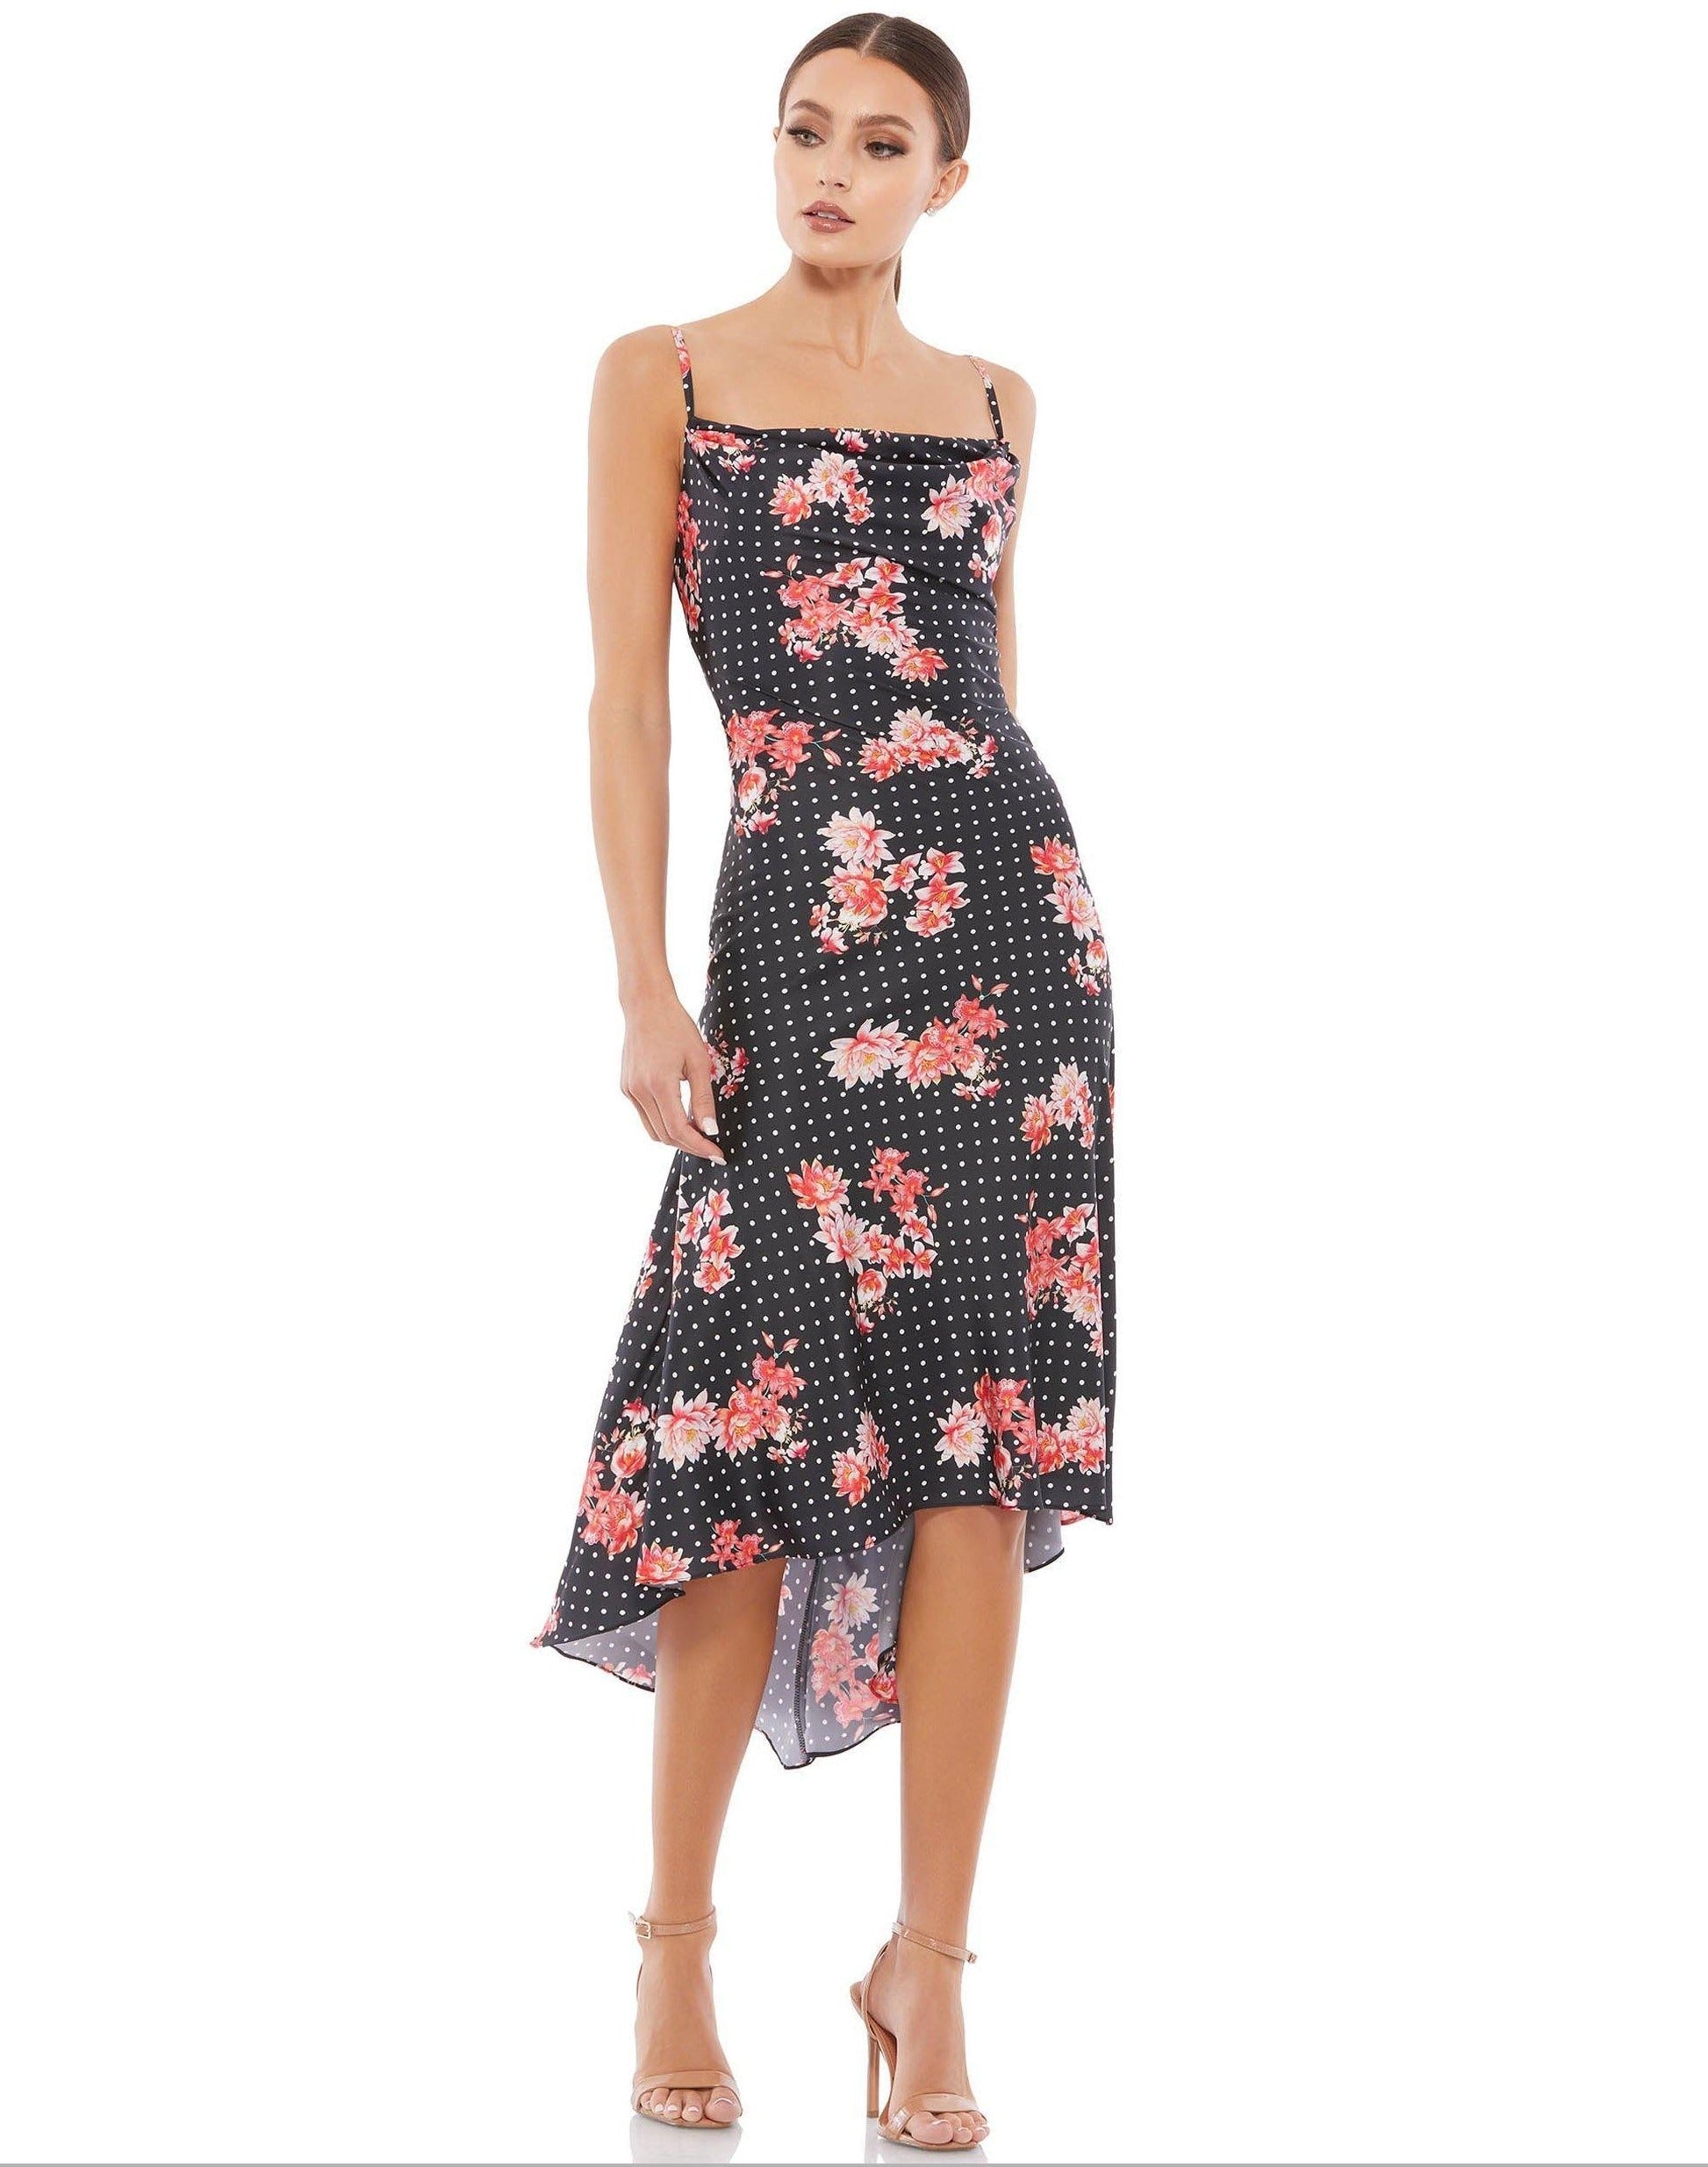 Mac Duggal High Low Floral Print Satin Dress 55392 - The Dress Outlet